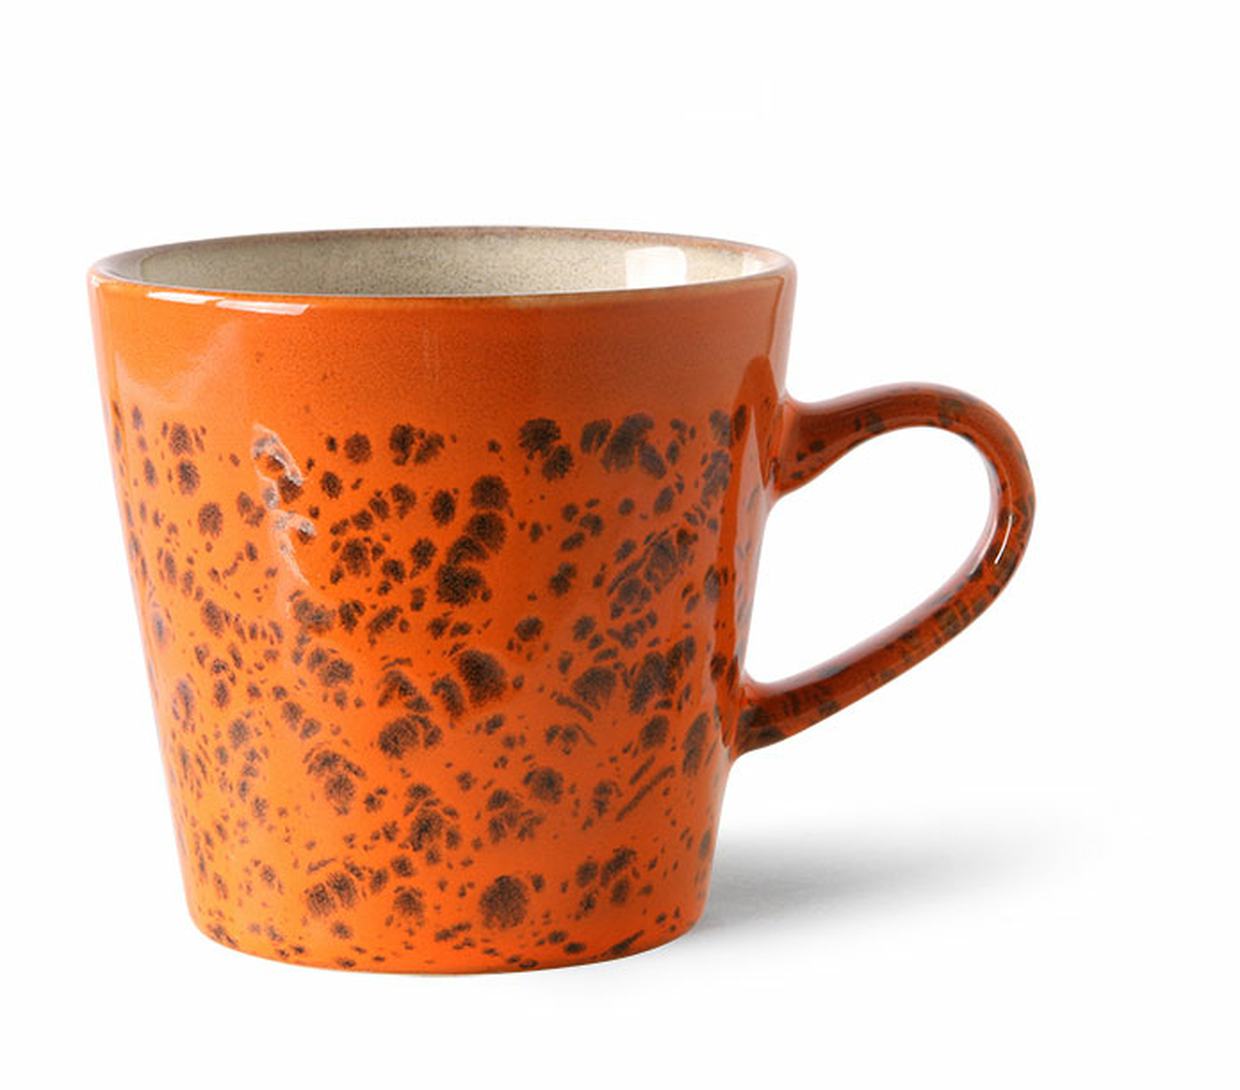 70s ceramics: americano mug, magma